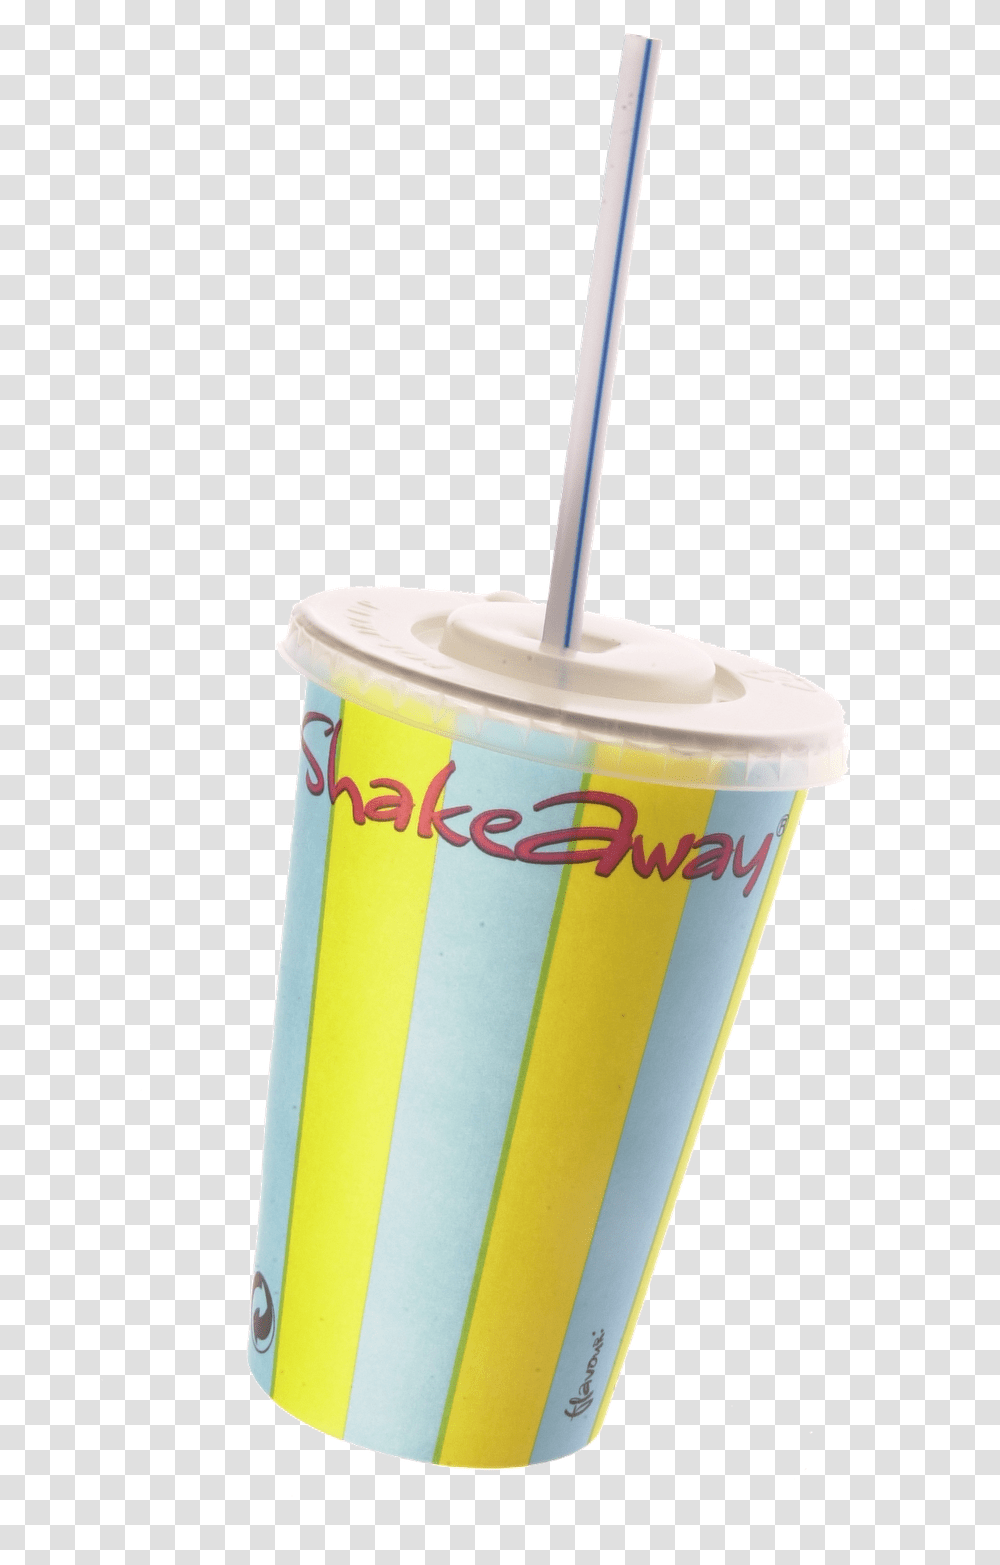 Original Shakeaway Cup Shake Away Milkshake, Beverage, Drink, Juice, Smoothie Transparent Png